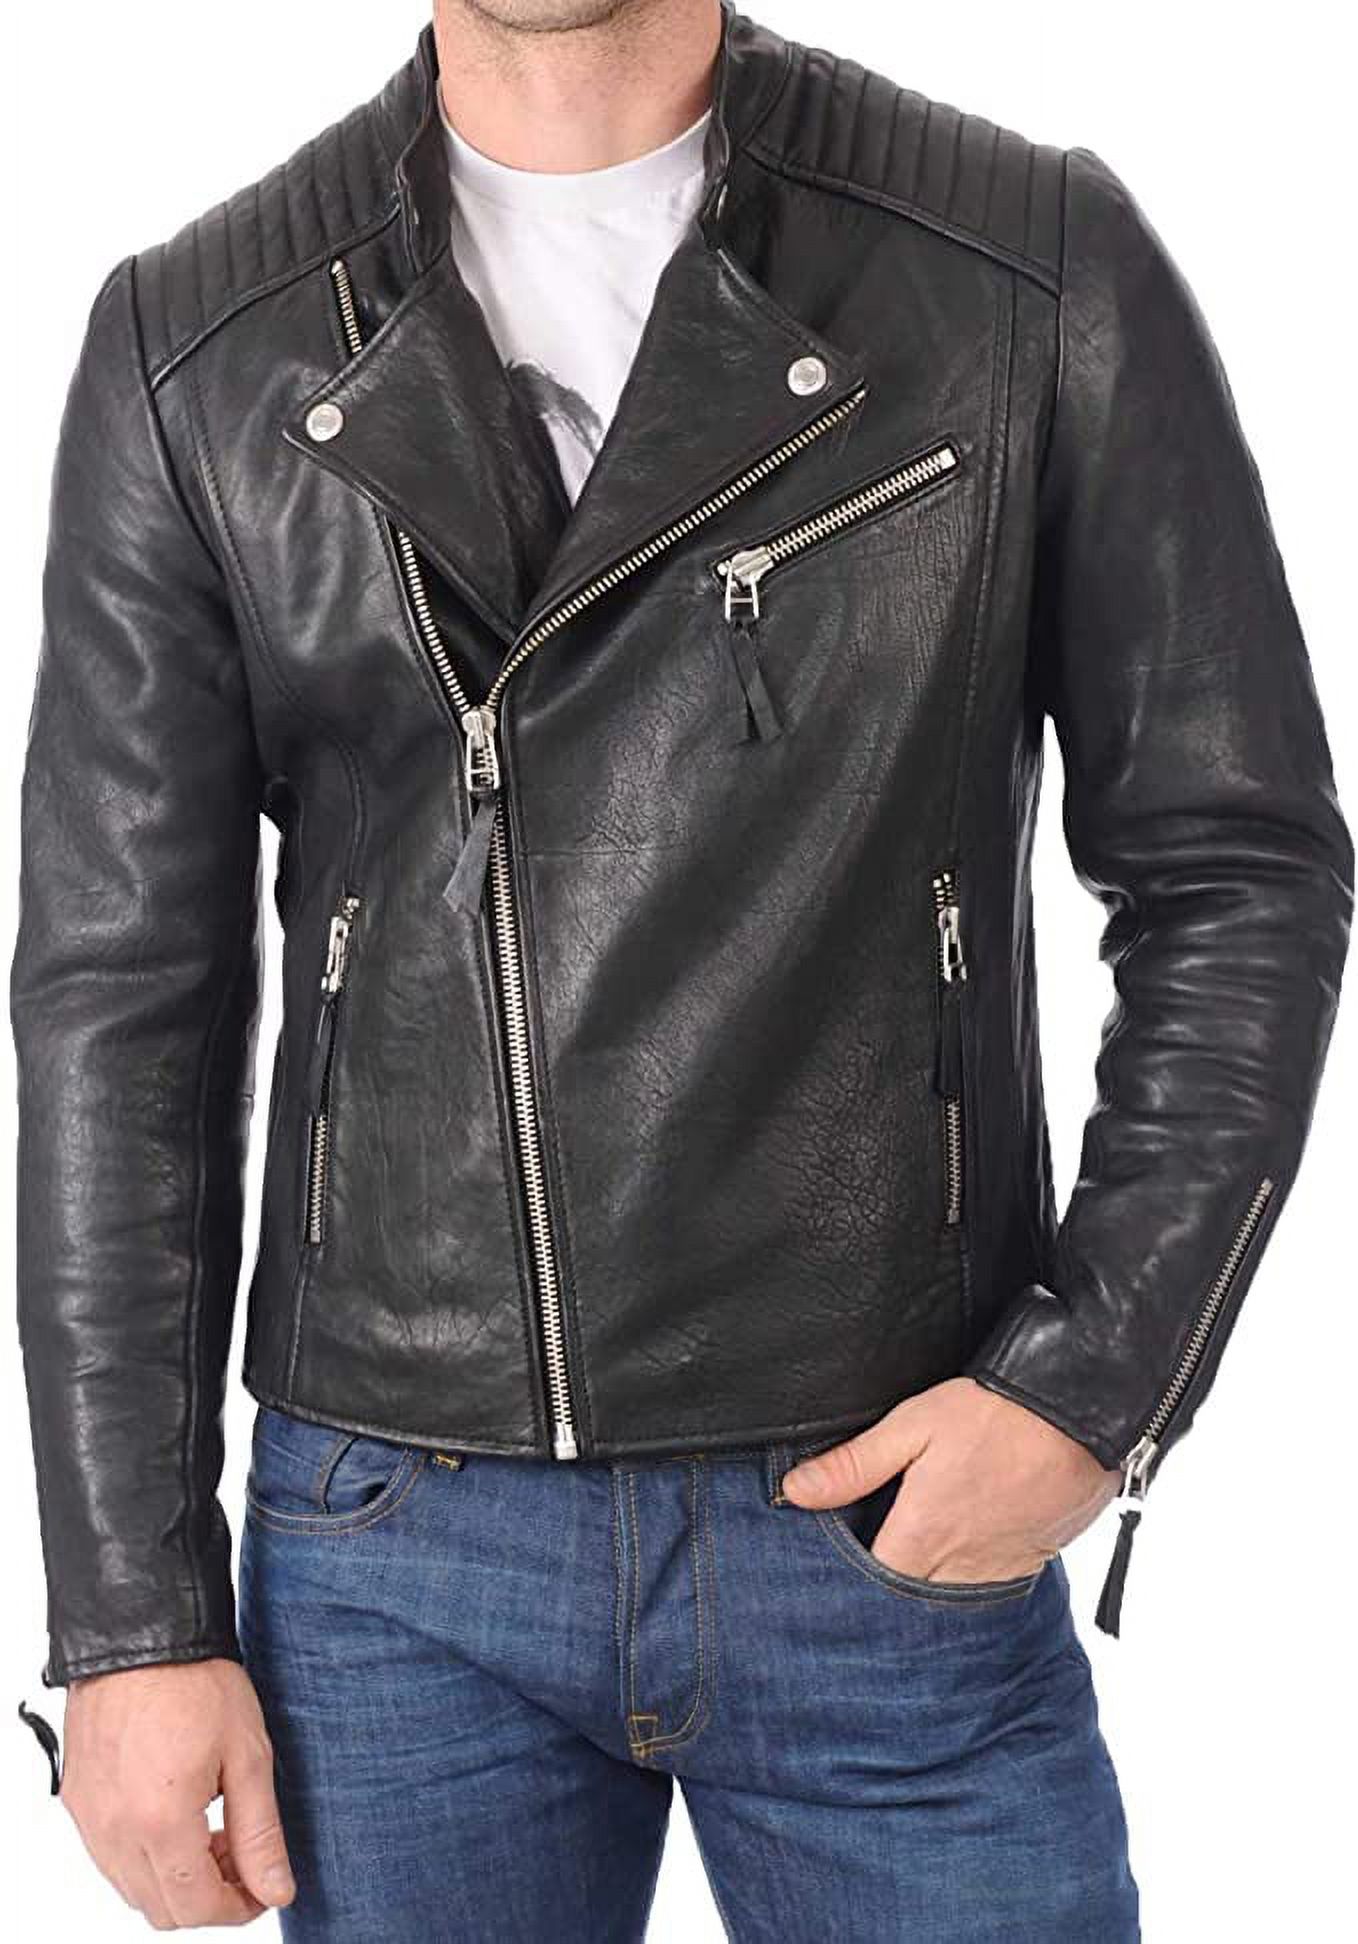 SkinOutfit Men's Leather Jacket Genuine Lambskin Motorcycle Bomber ...